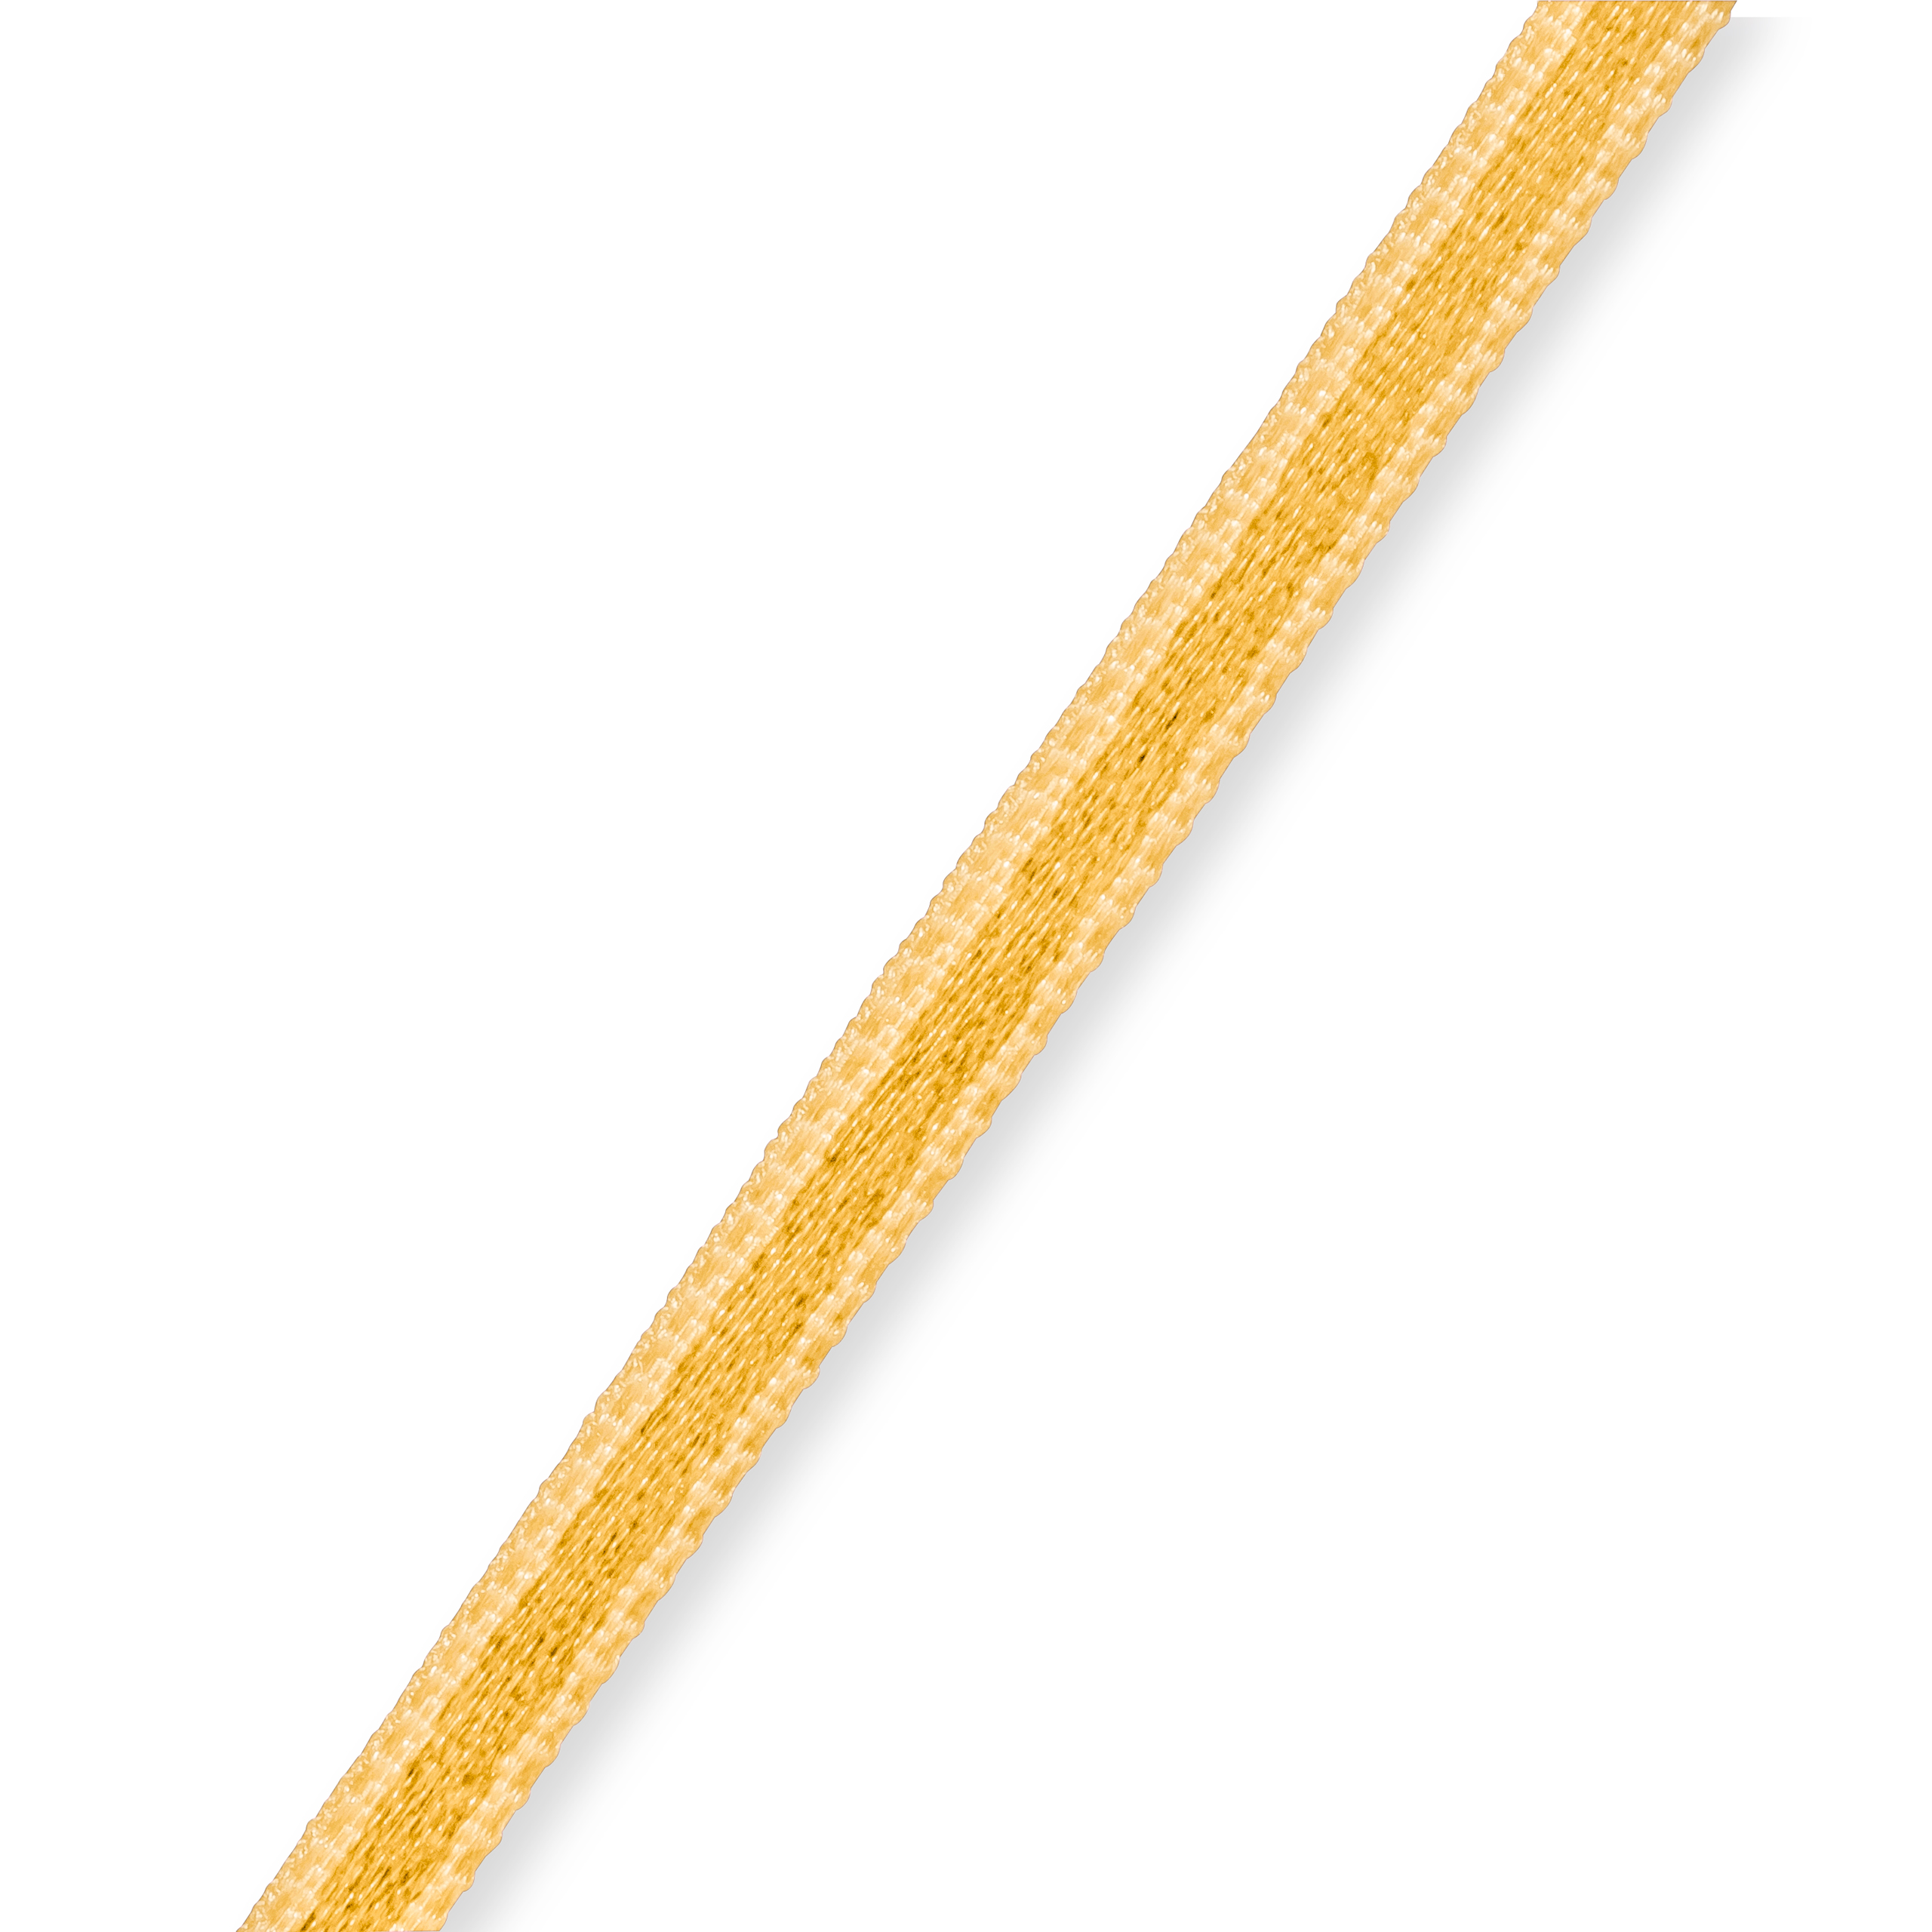 Satin ribbon 3 mm gold, 50 m